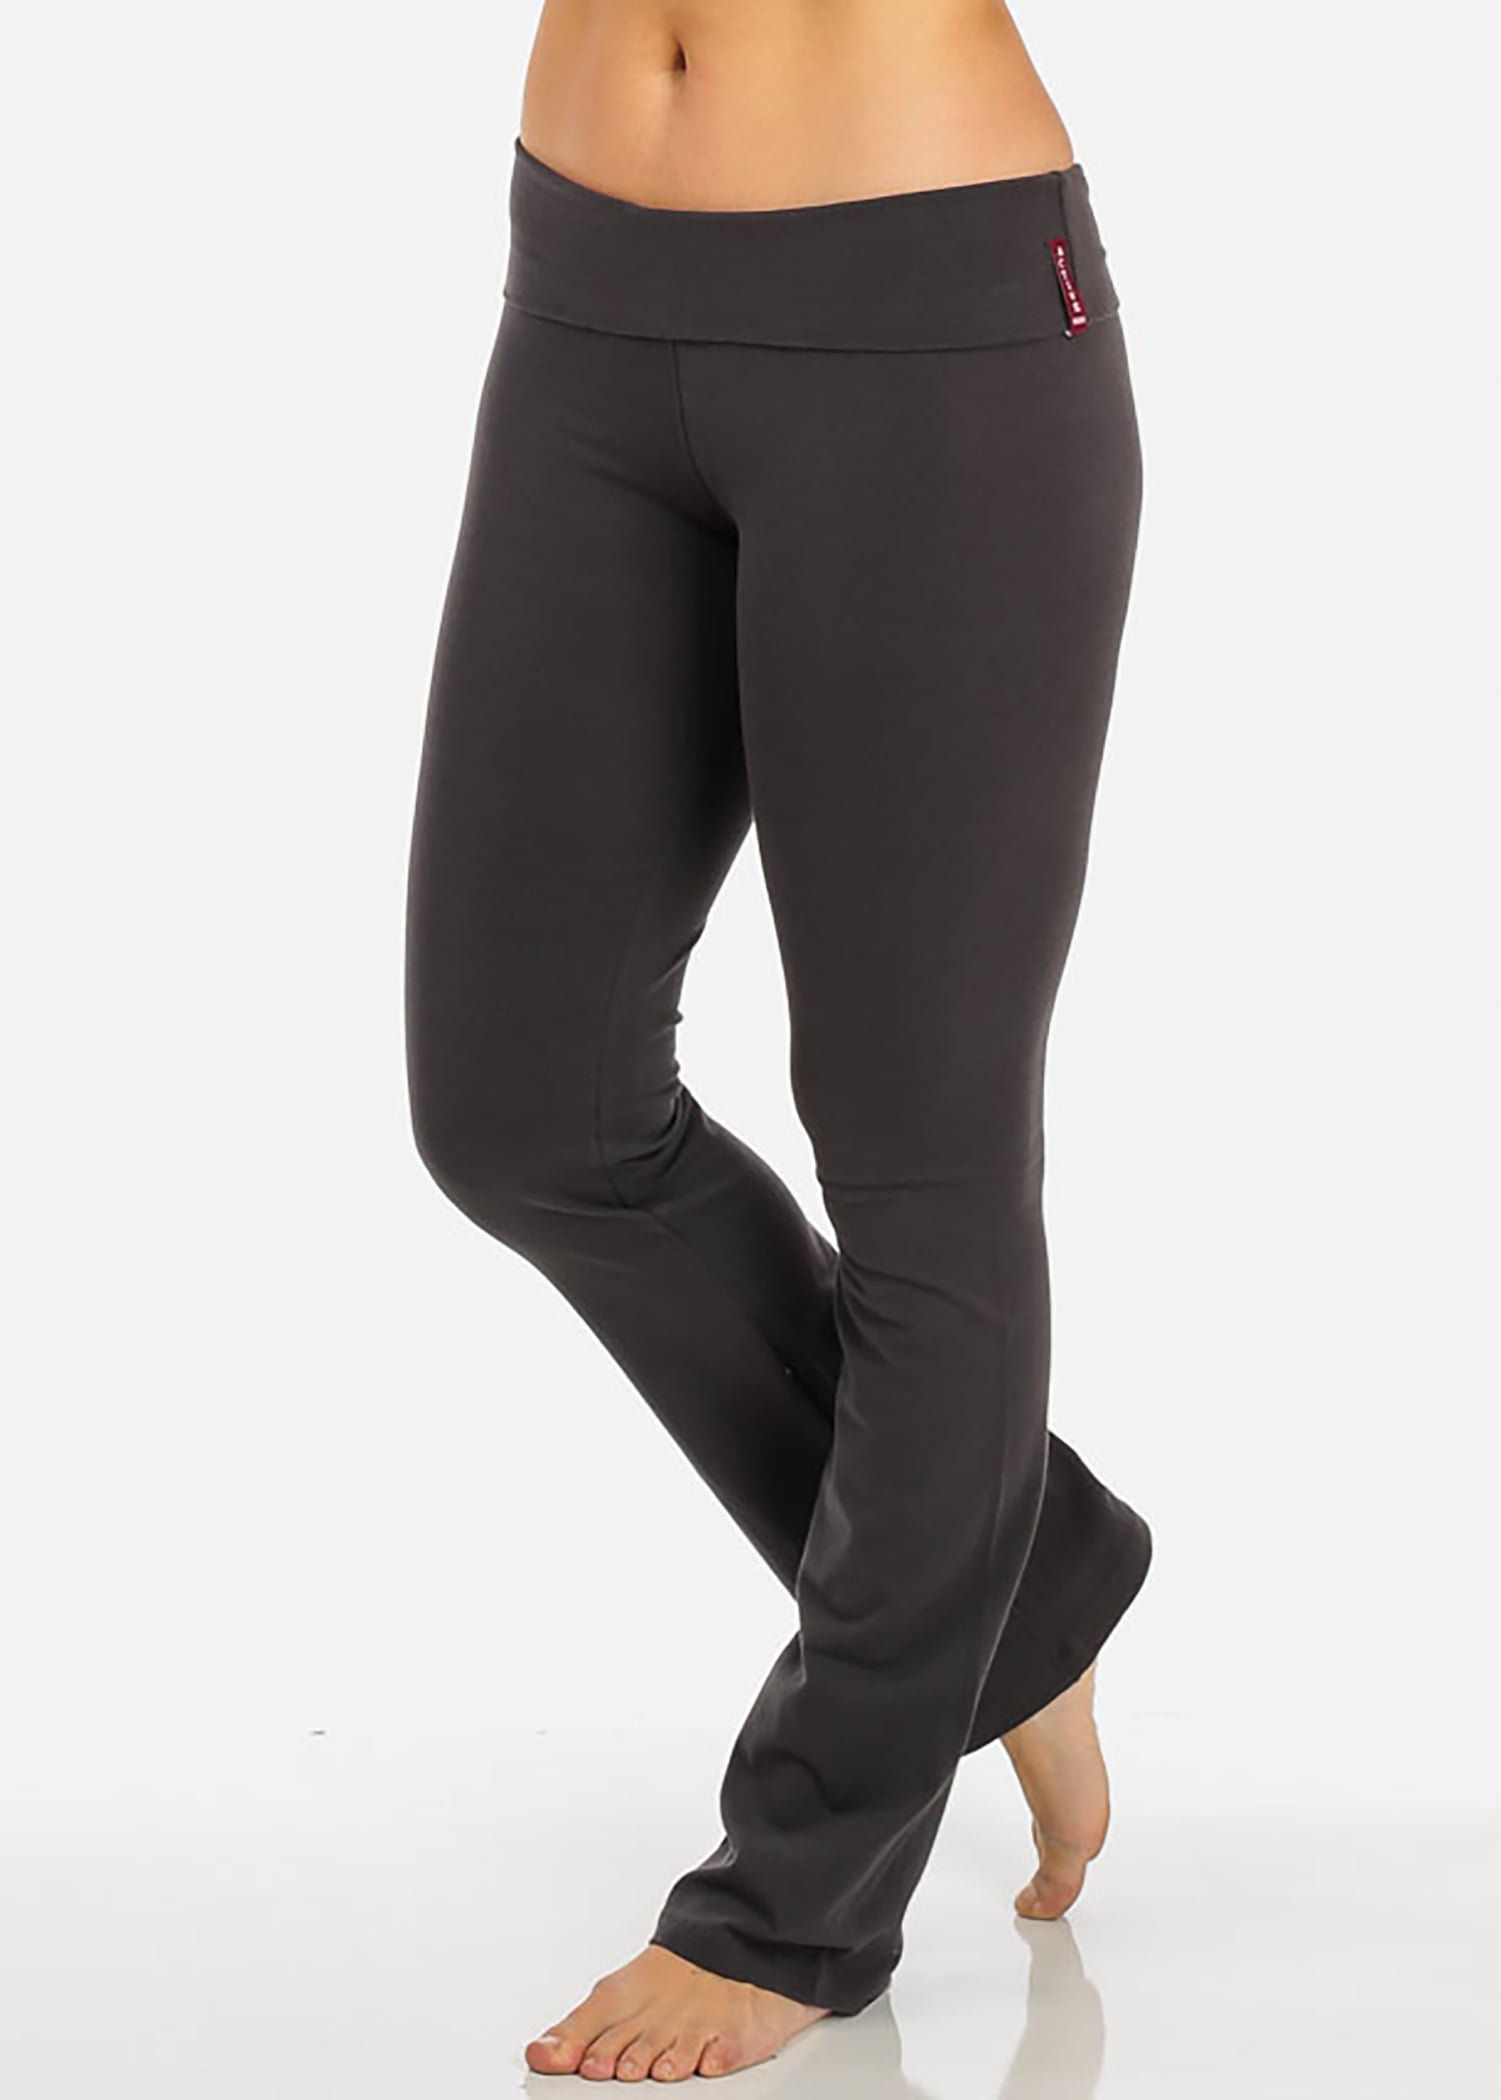 Abi & Joseph Slim Fit Yoga Pants – Regular Leg - Sports Bras Direct